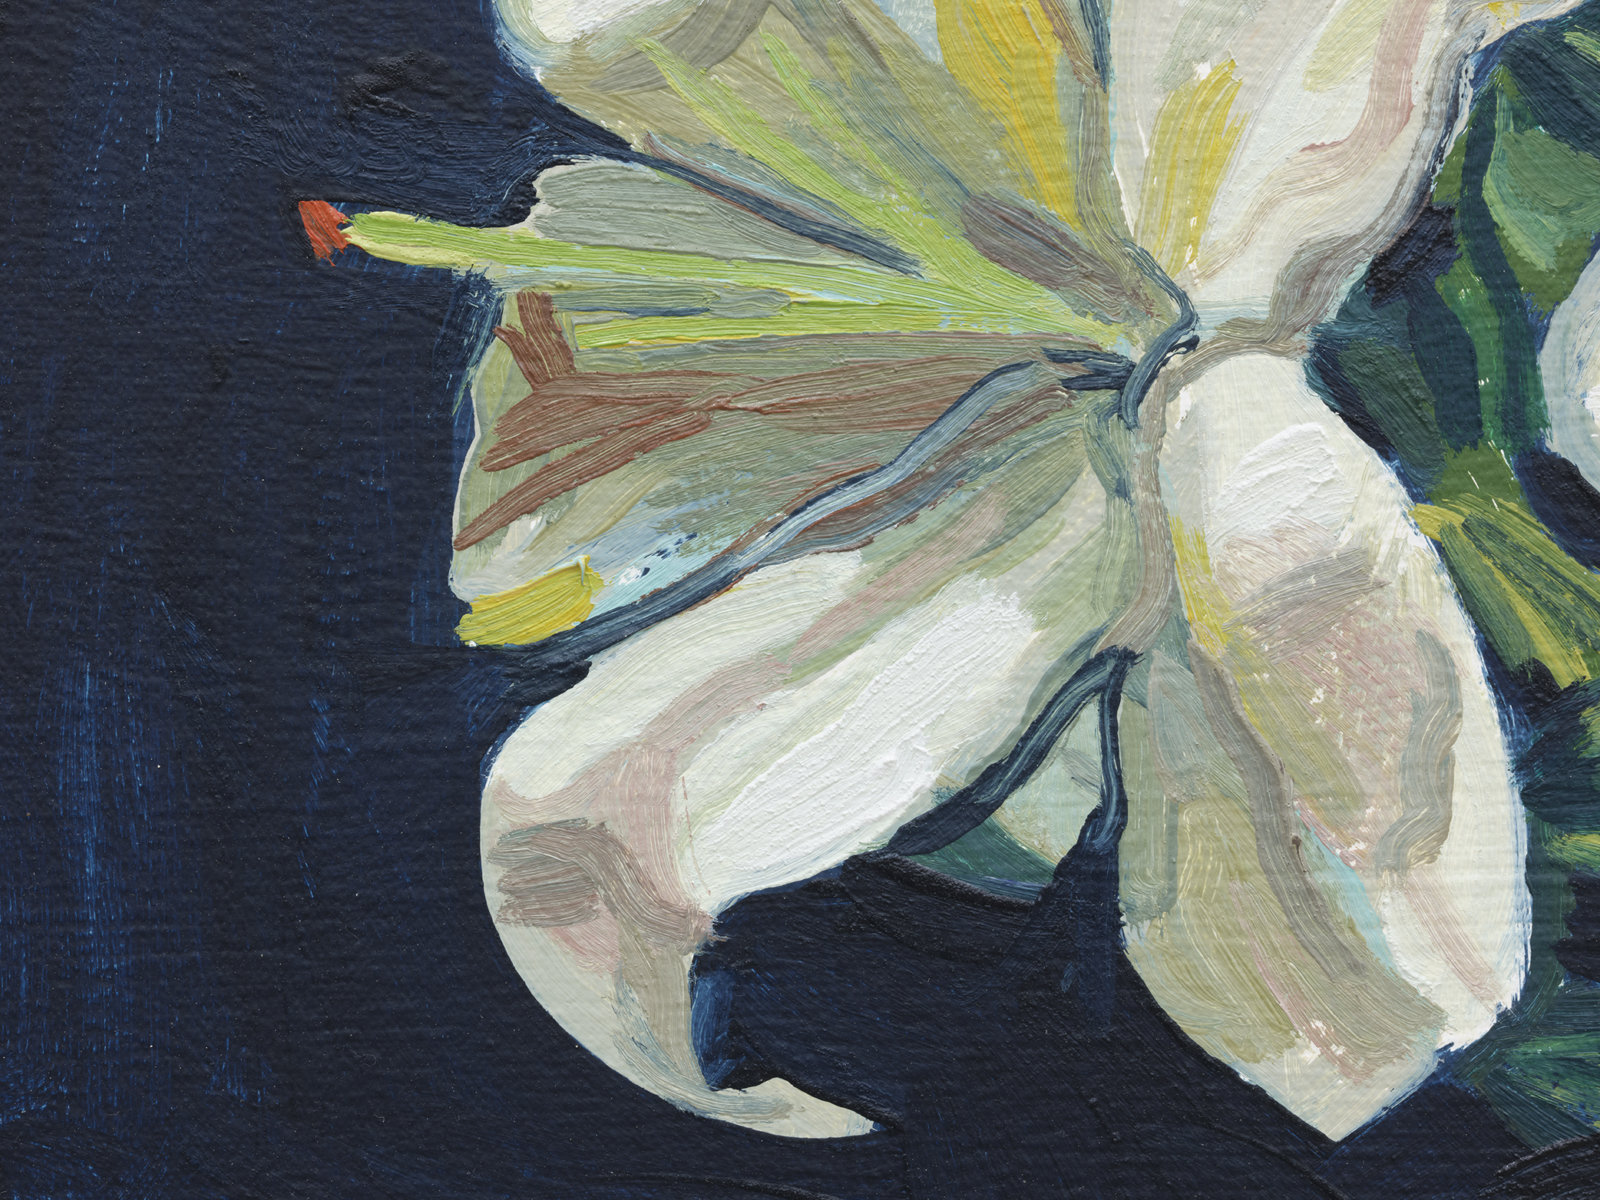 Damian Moppett, Lilies (Indigo) (detail), 2020, oil on canvas, 32 x 27 in. (82 x 69 cm)